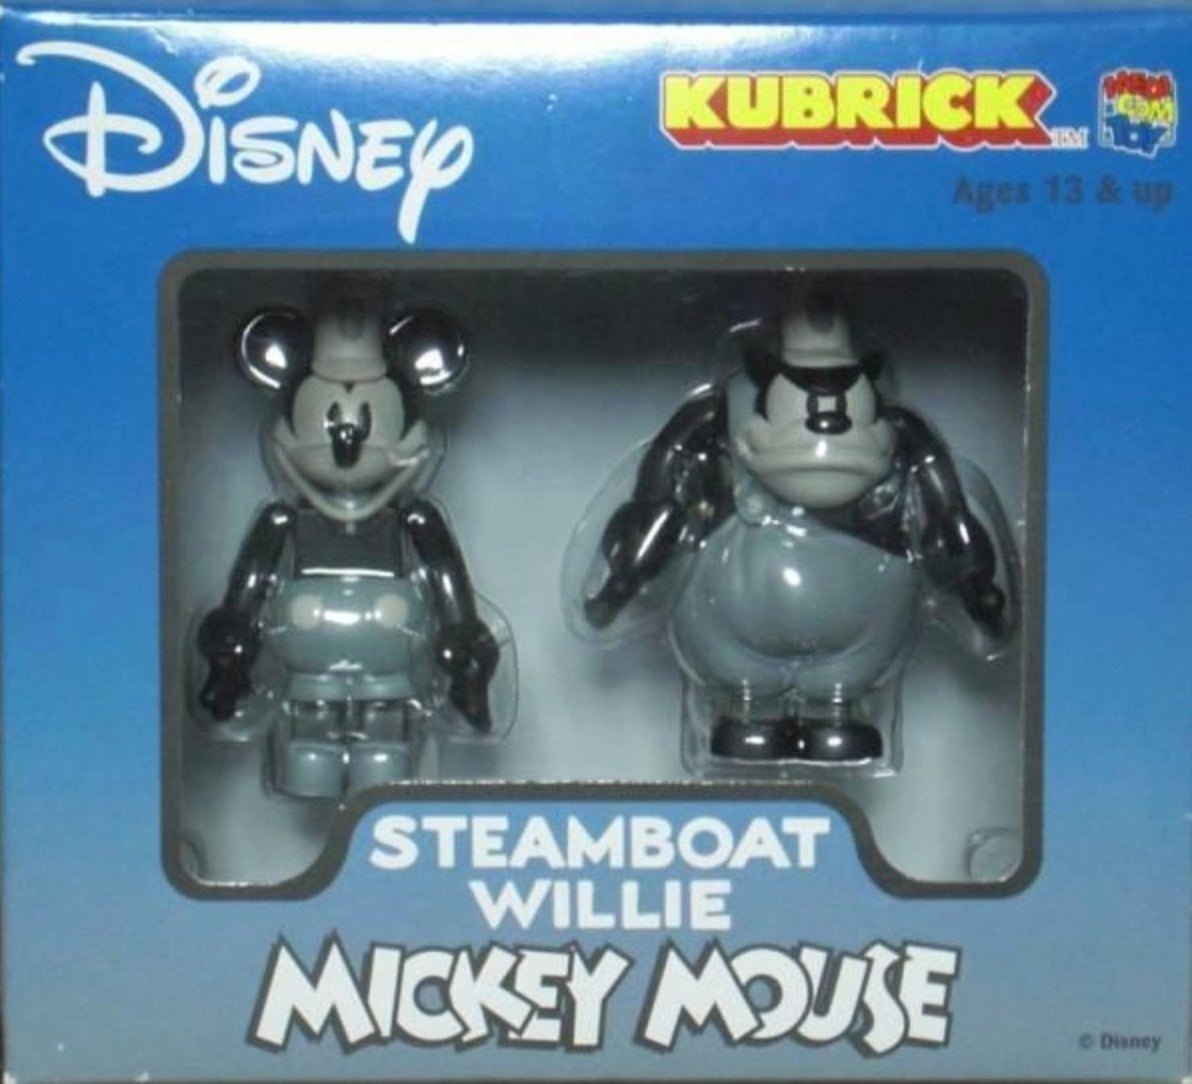 Medicom Toy Kubrick 100% Disney Steamboat Willie Mickey Mouse 